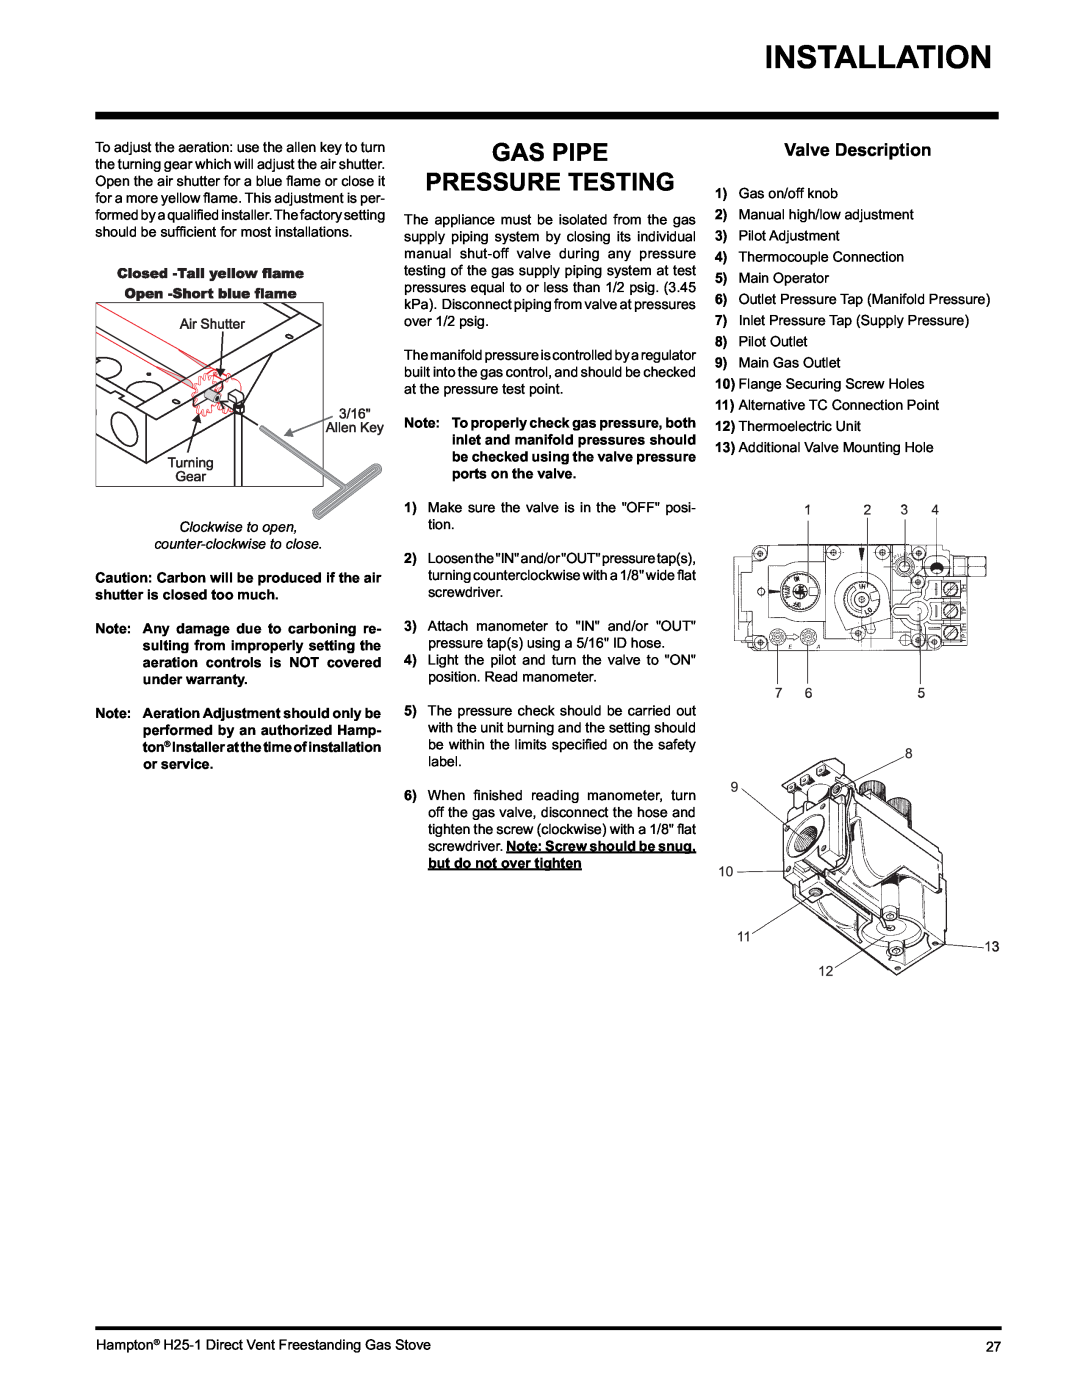 Hampton Direct H25-LP1, H25-NG1 installation manual Gas Pipe Pressure Testing, Installation, Valve Description 